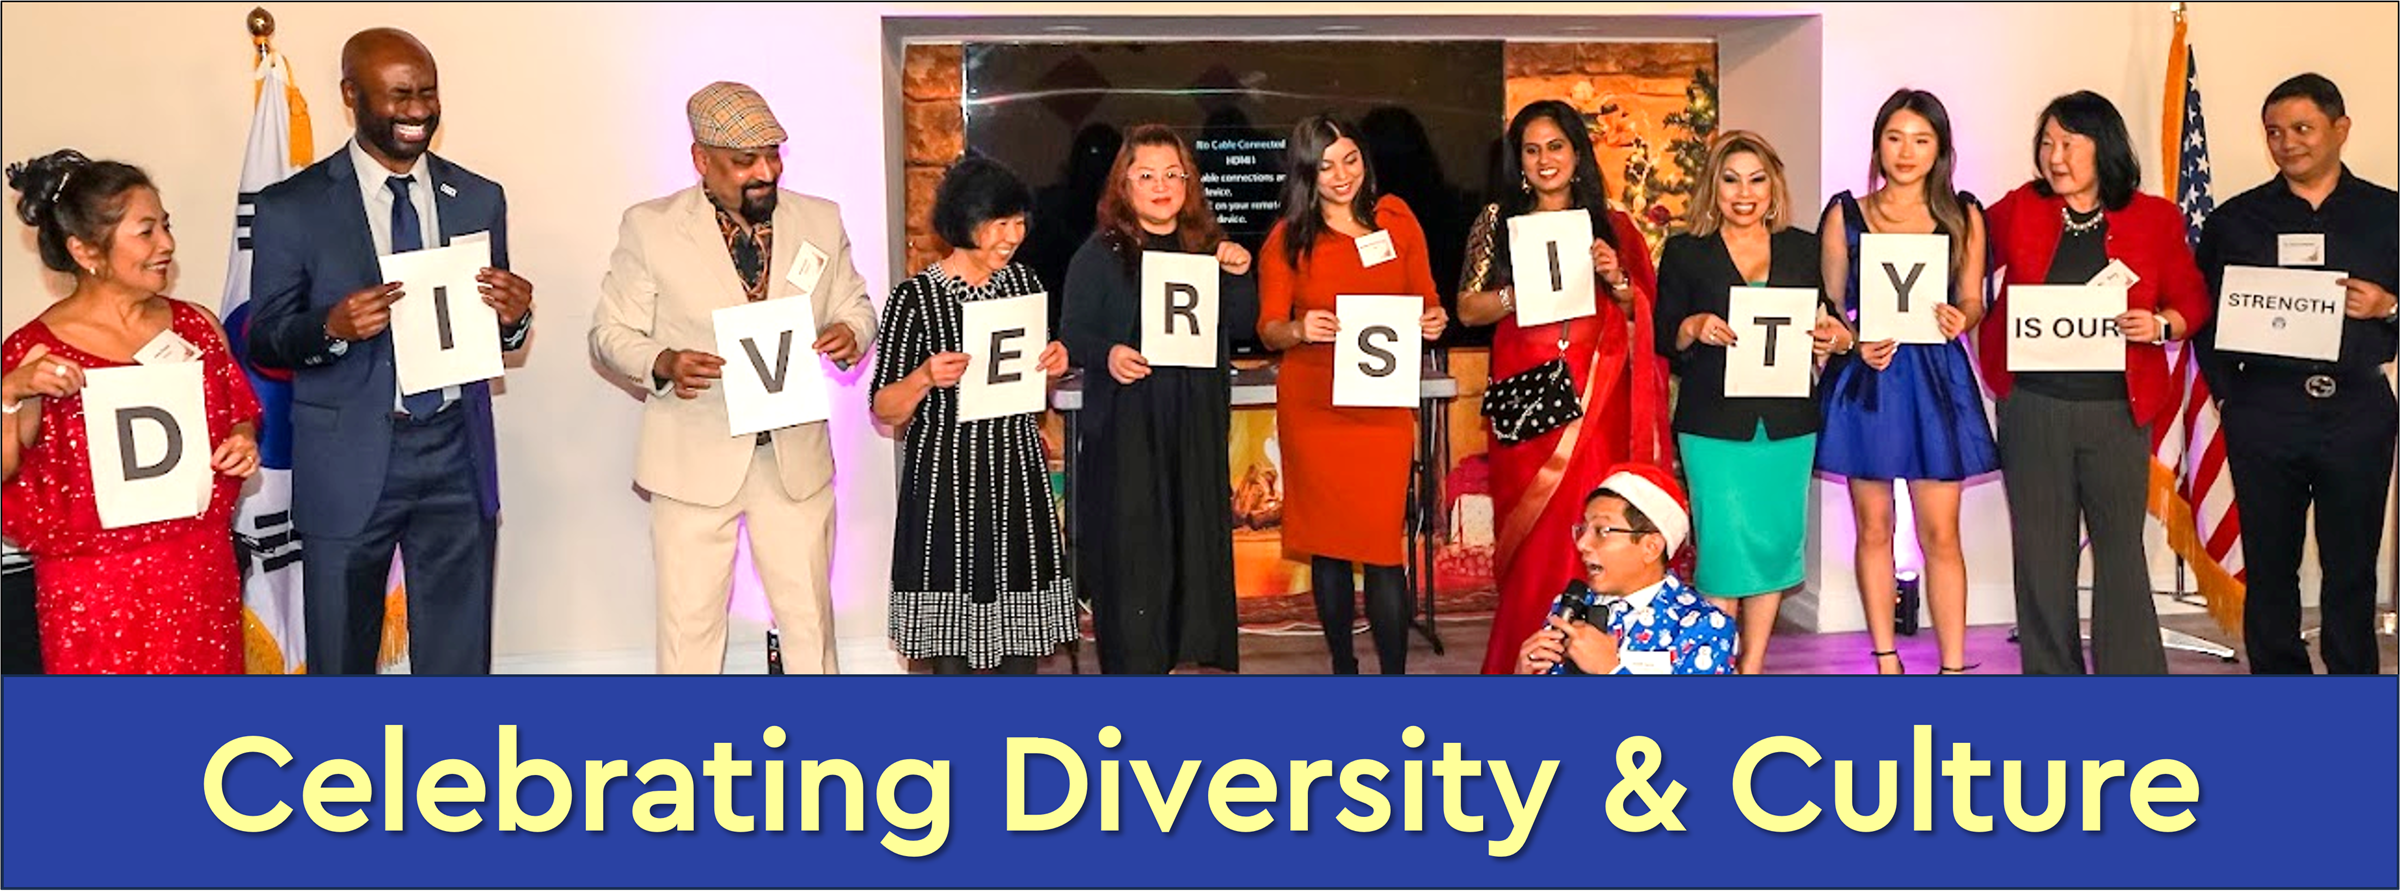 CAPA-Diversity-banner